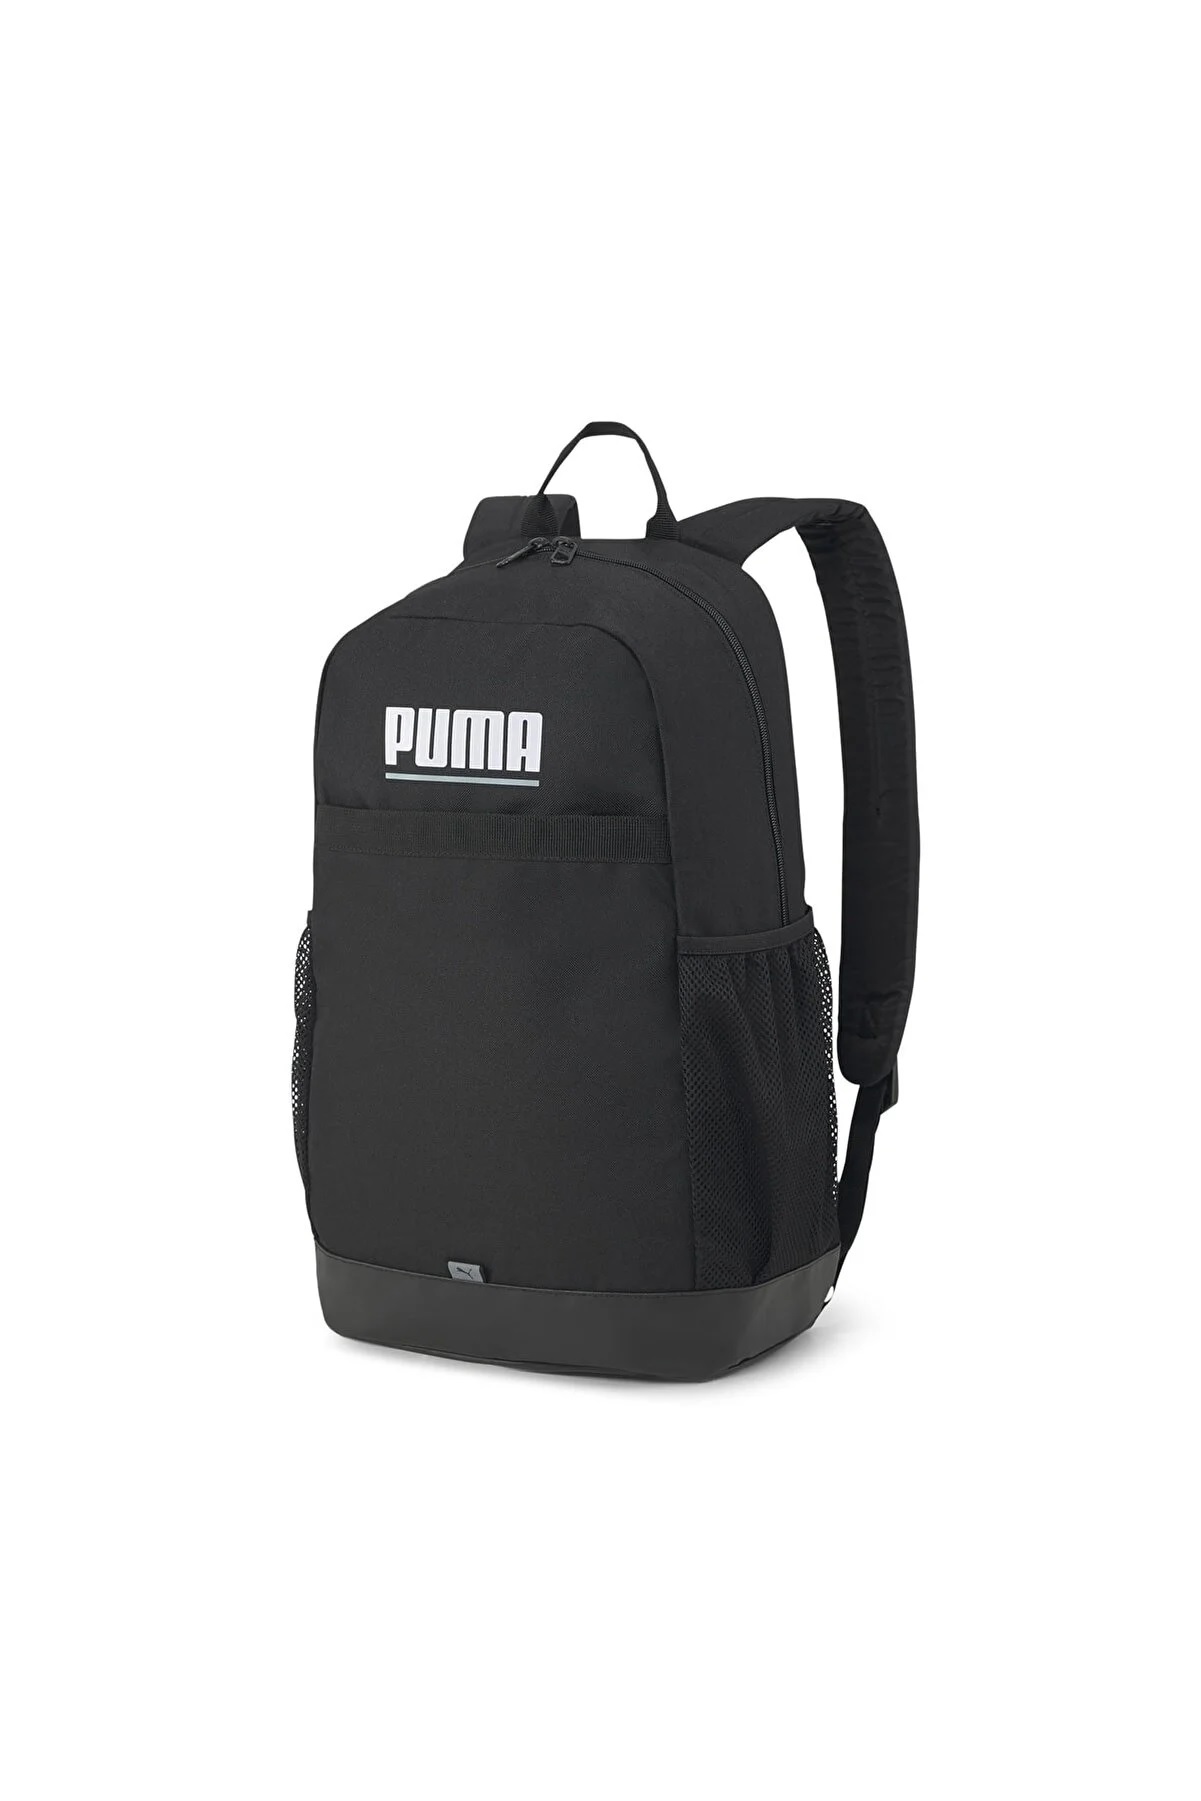 Puma batoh Plus Backpack black Velikost: OSFA